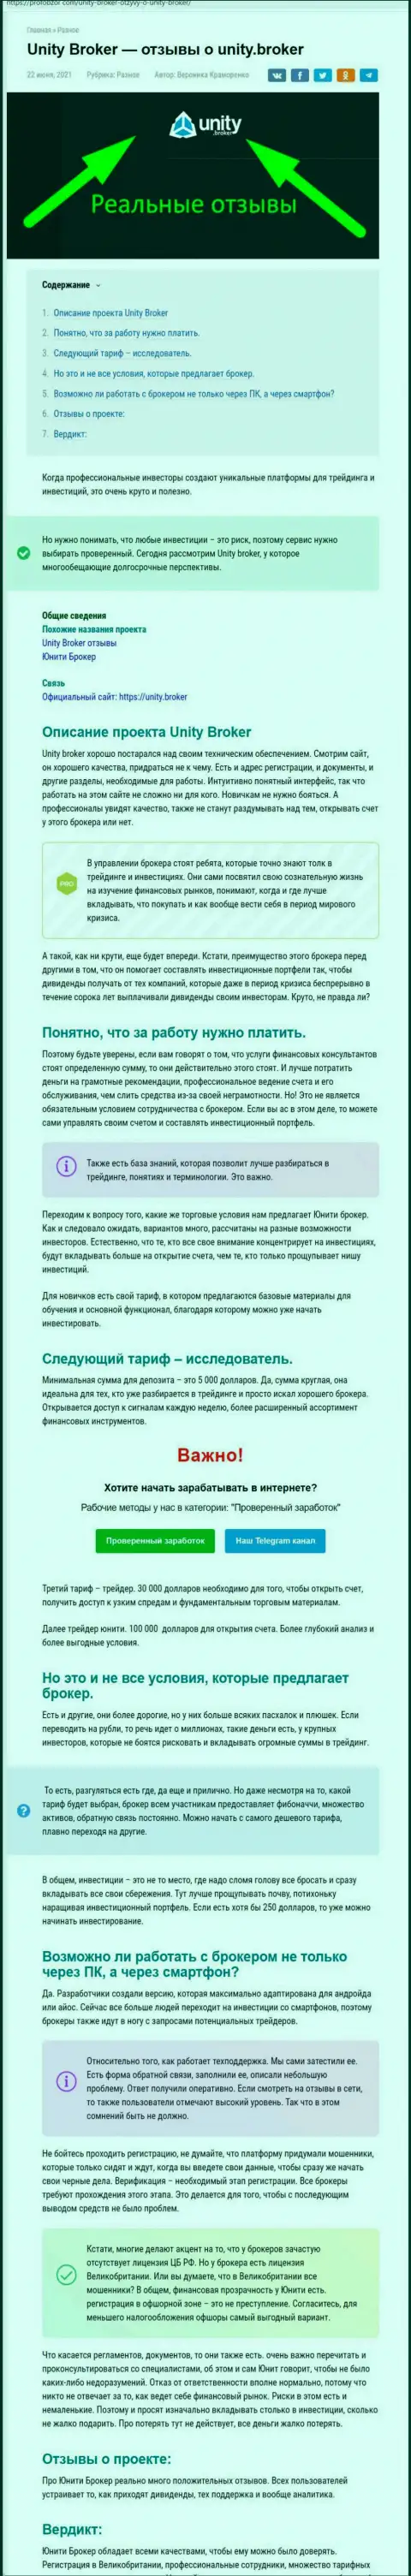 Обзор ФОРЕКС-компании Юнити Брокер на ресурсе ПрофОбзор Ком